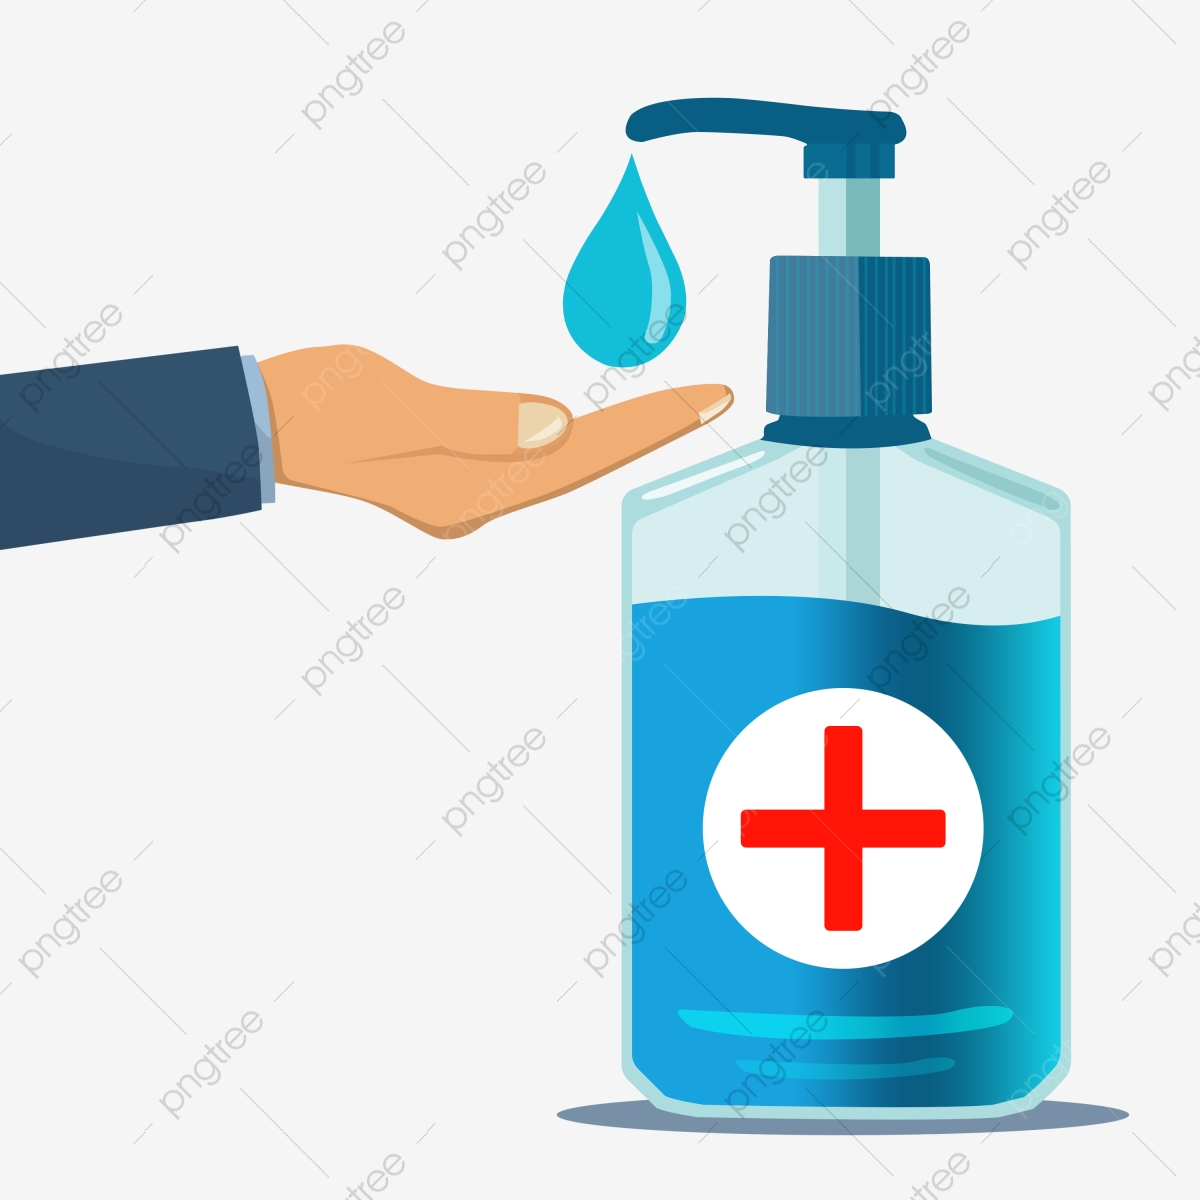 Hand Sanitizer Png Transparen